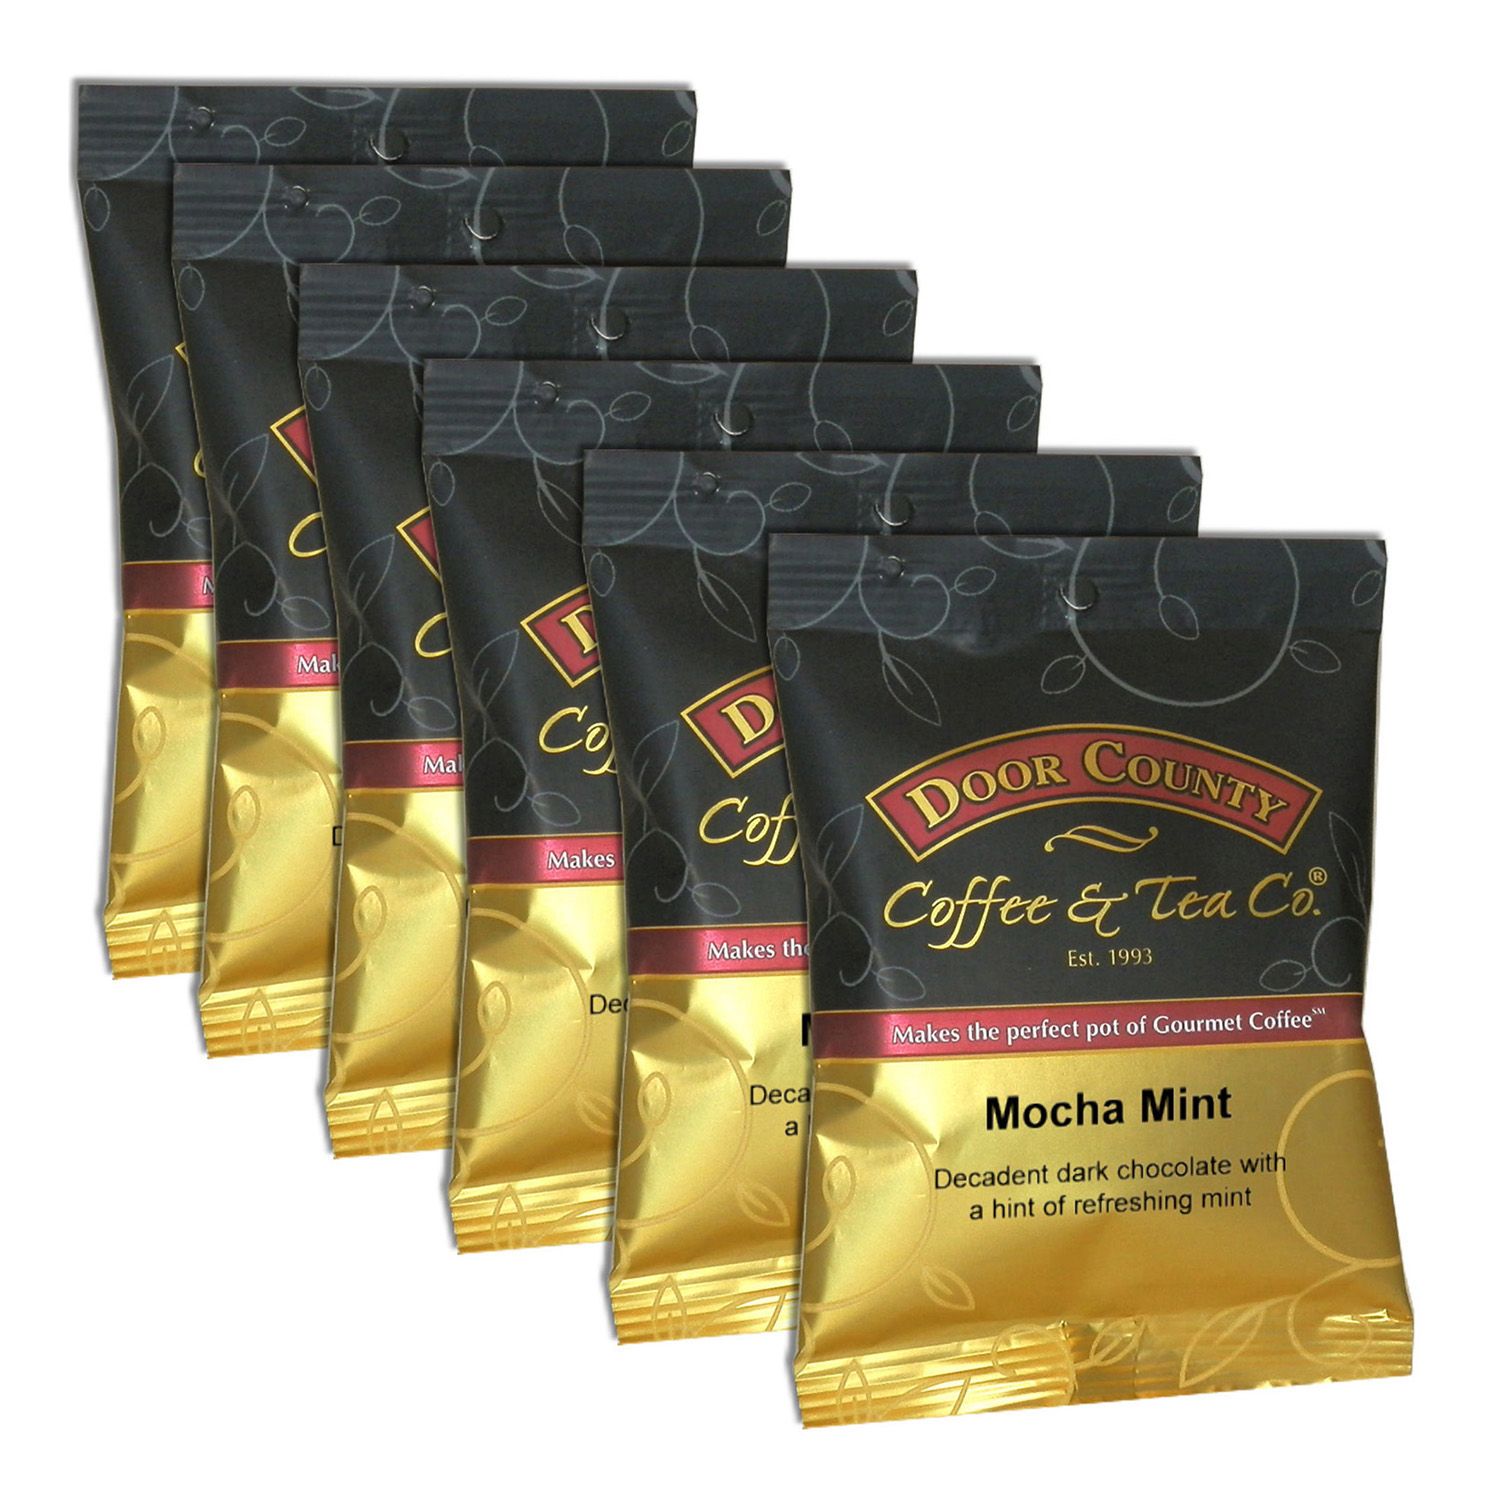 Image for Door County Coffee & Tea Co. Mocha Mint Ground Coffee 6-pk. at Kohl's.